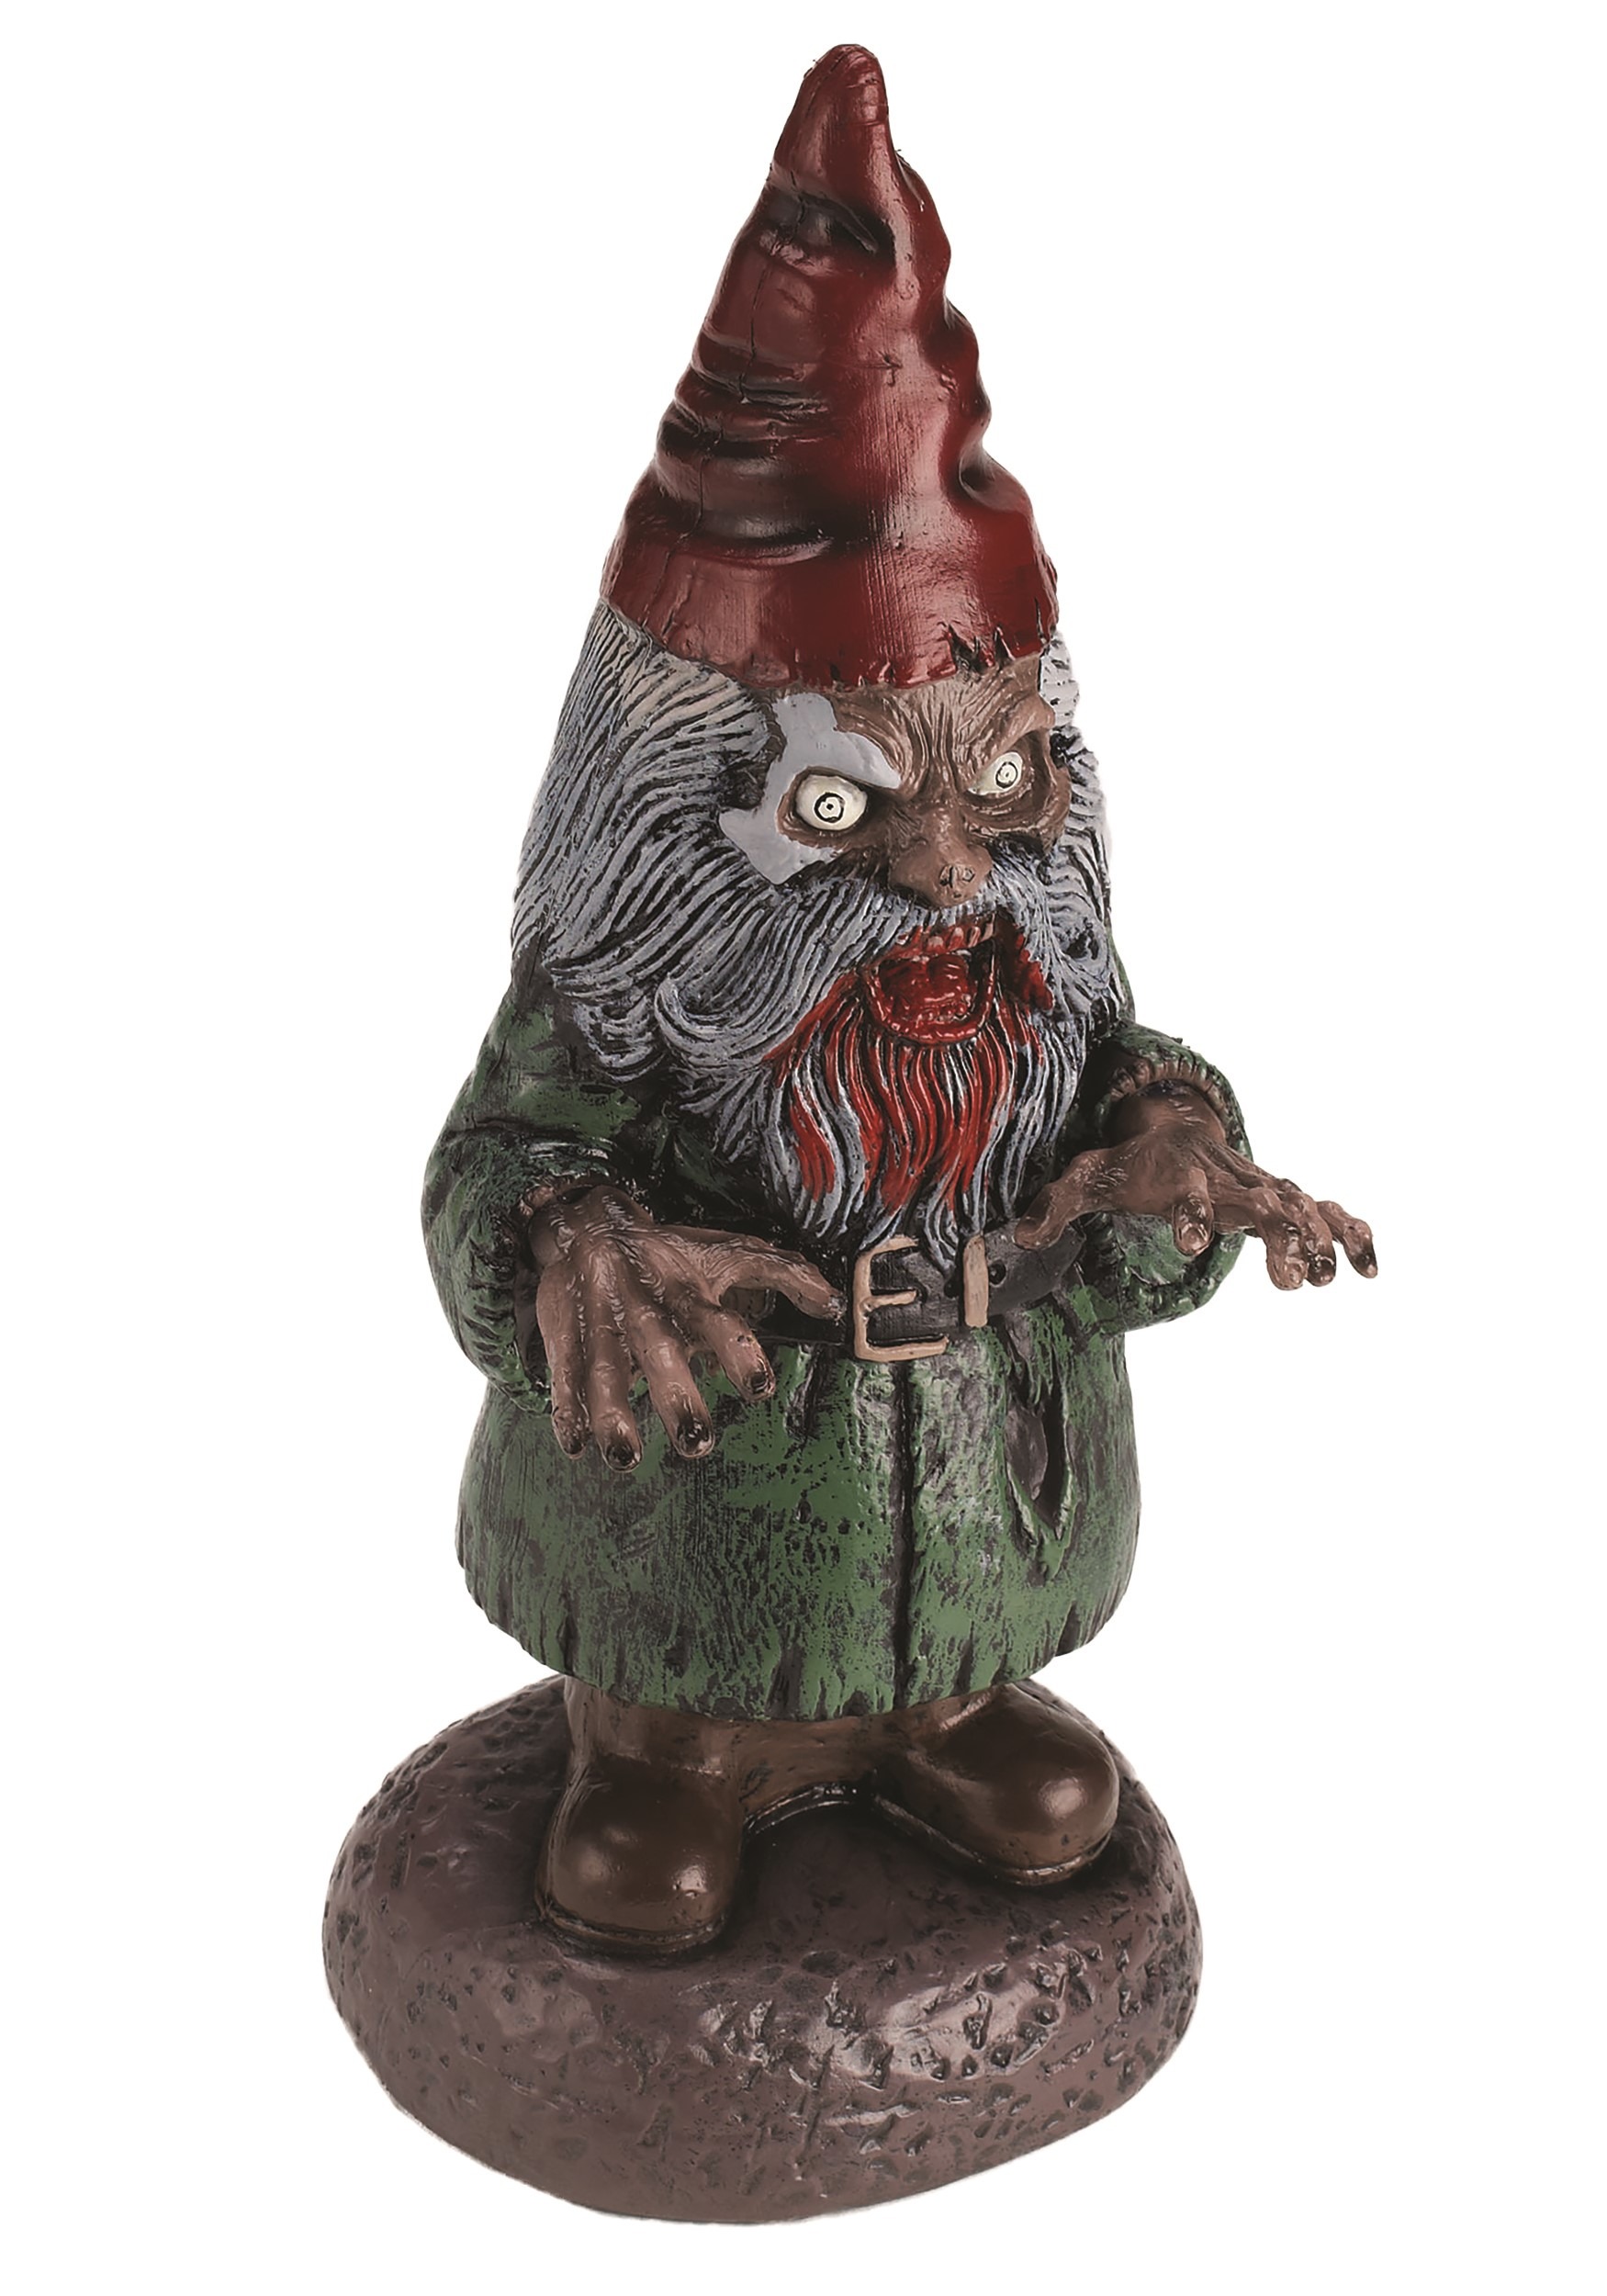 Horror Gnome Halloween Decoration